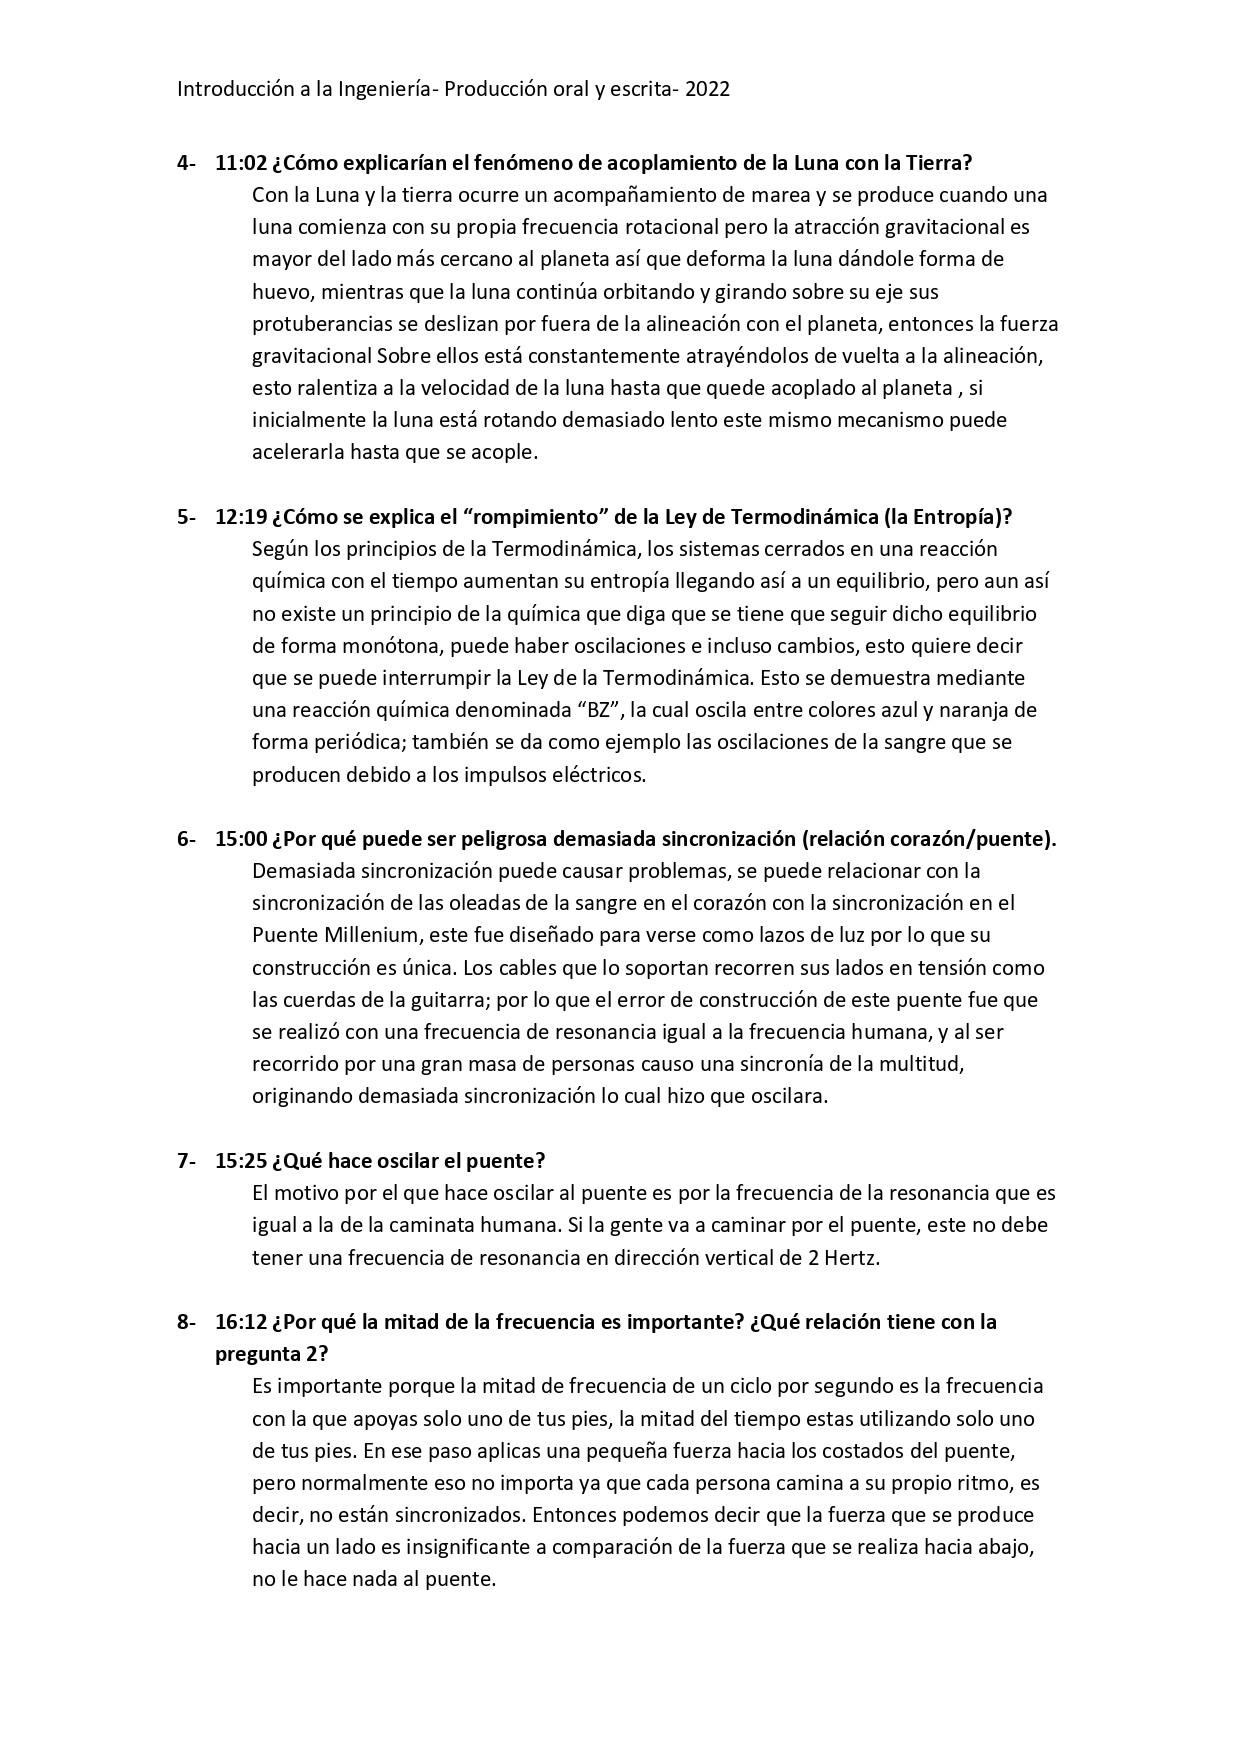 TP3 Sincronización - Grupo Cerati (1)_page-0002.jpg